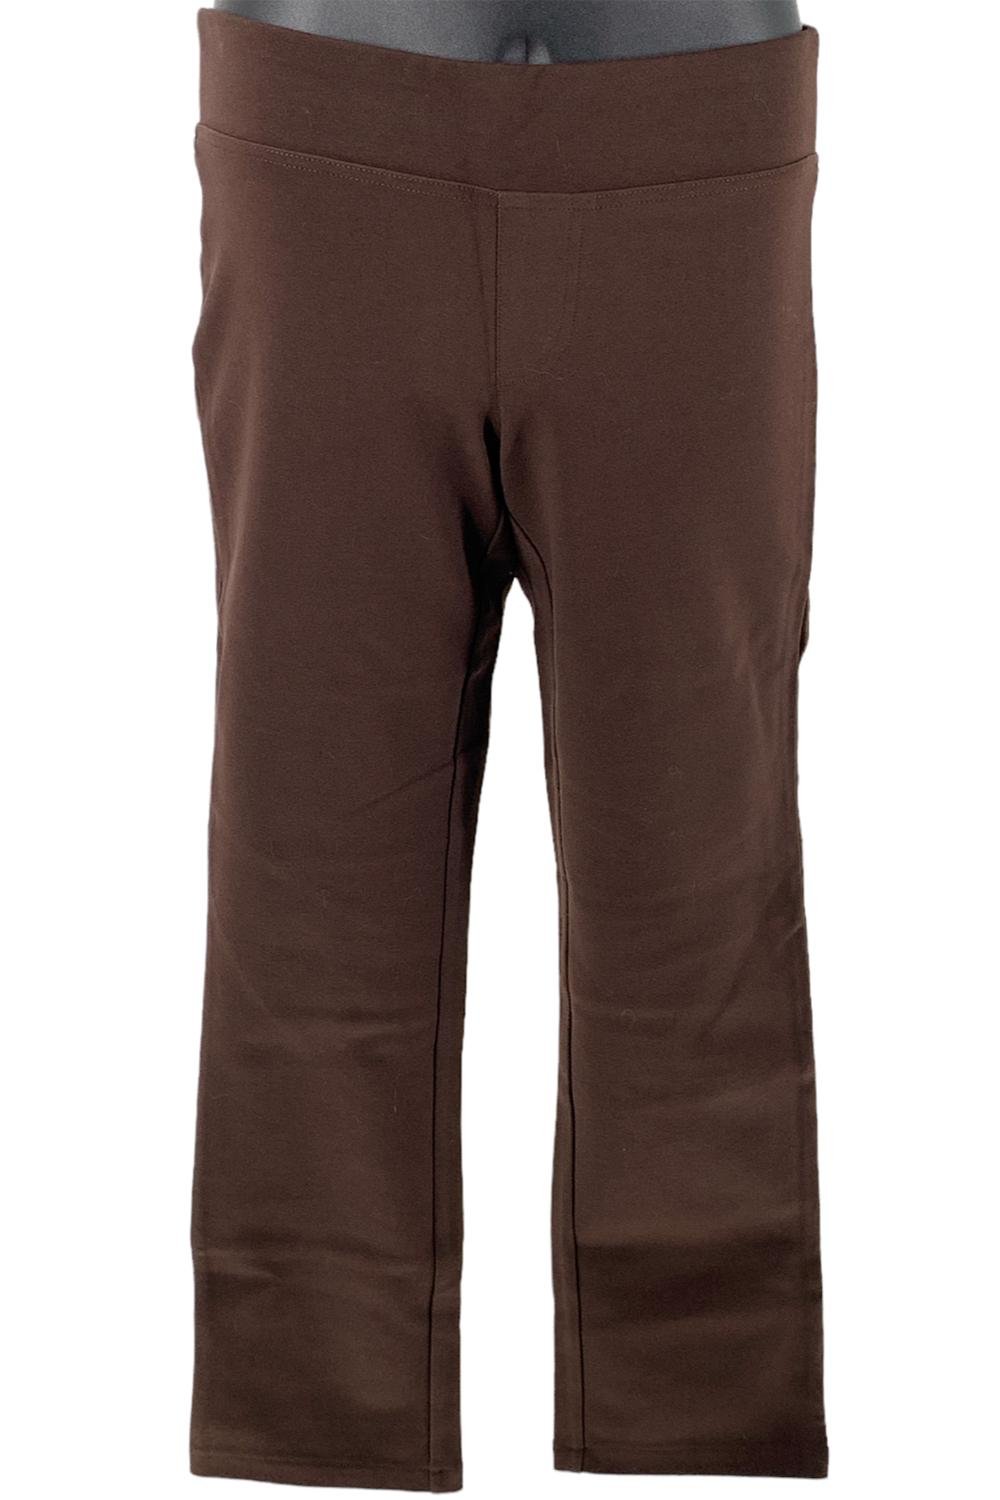 Isaac Mizrahi Live Regular Wide Leg Ponte Knit Pants, $55, QVC